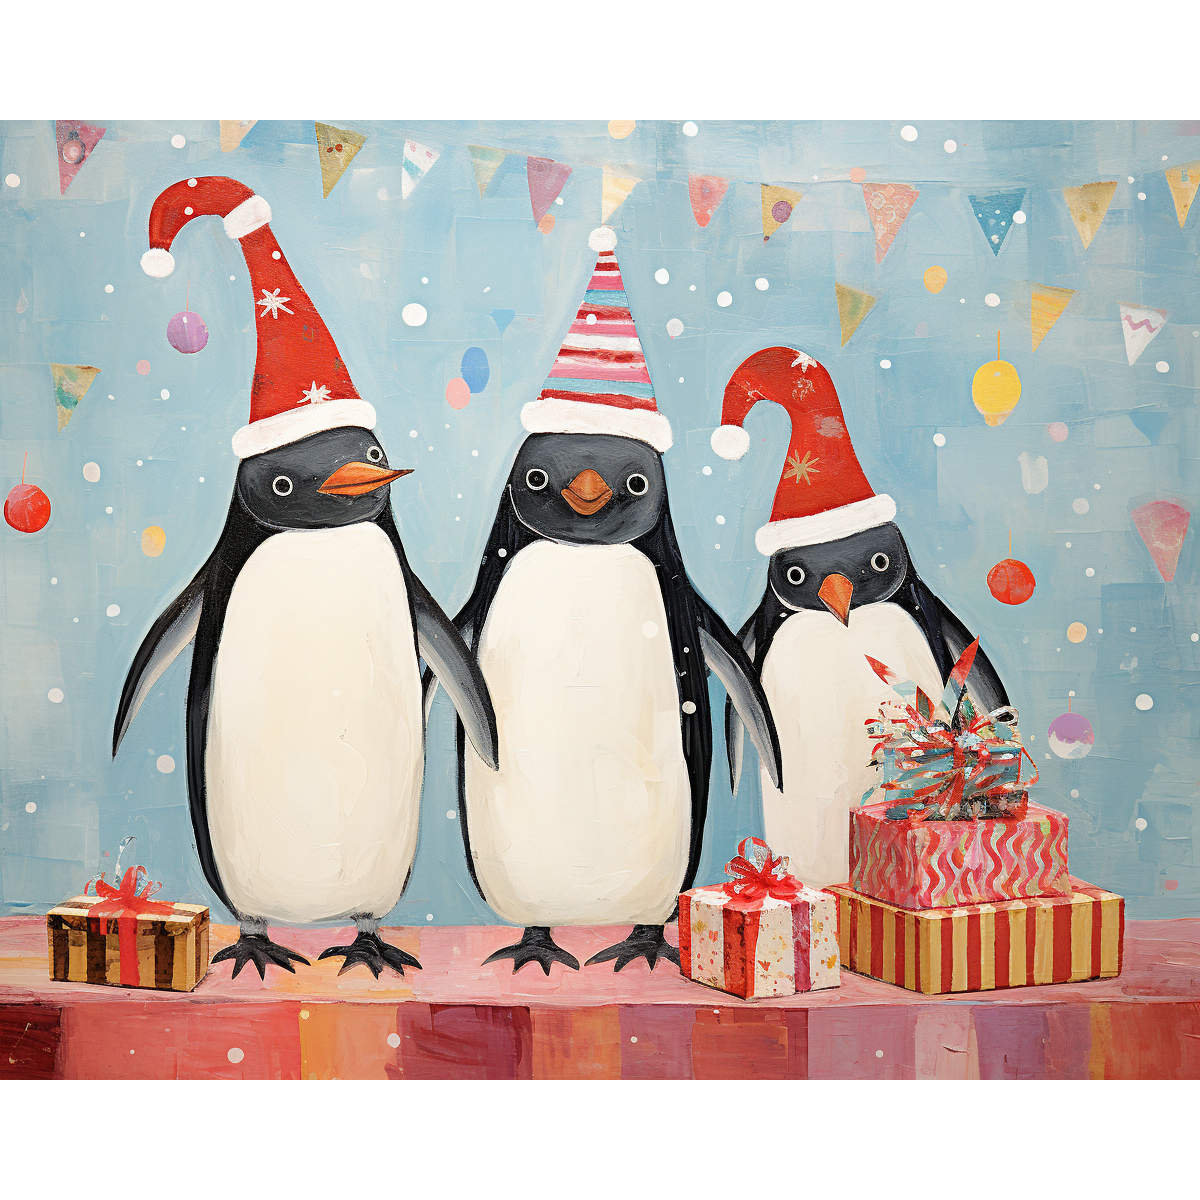 Very Festive Penguins